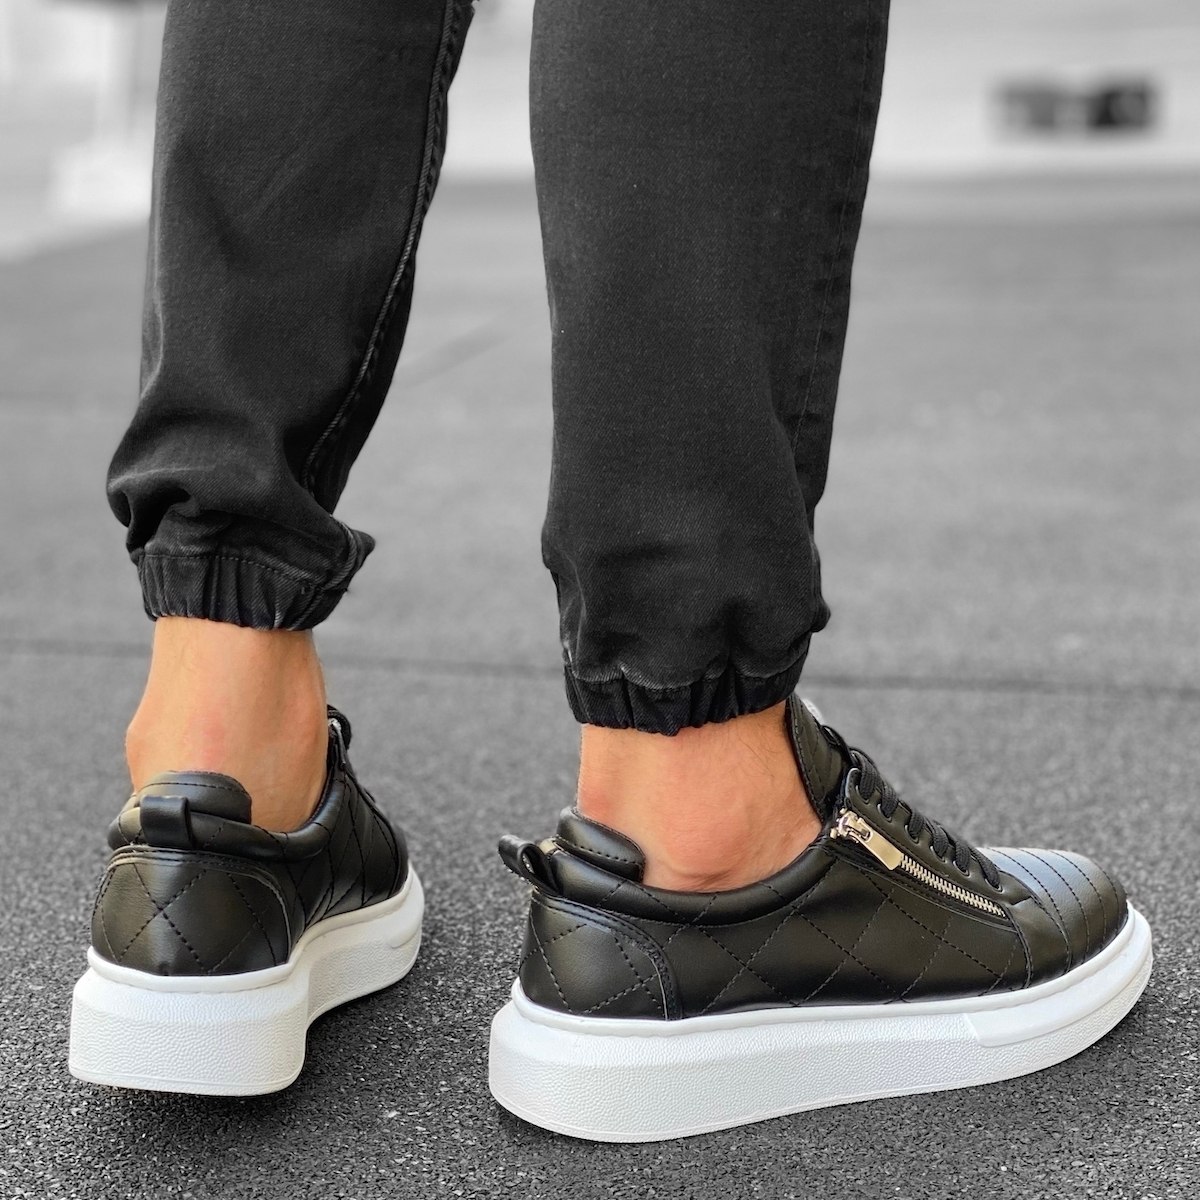 Men’s Stitch Zipper Sneakers Shoes Black